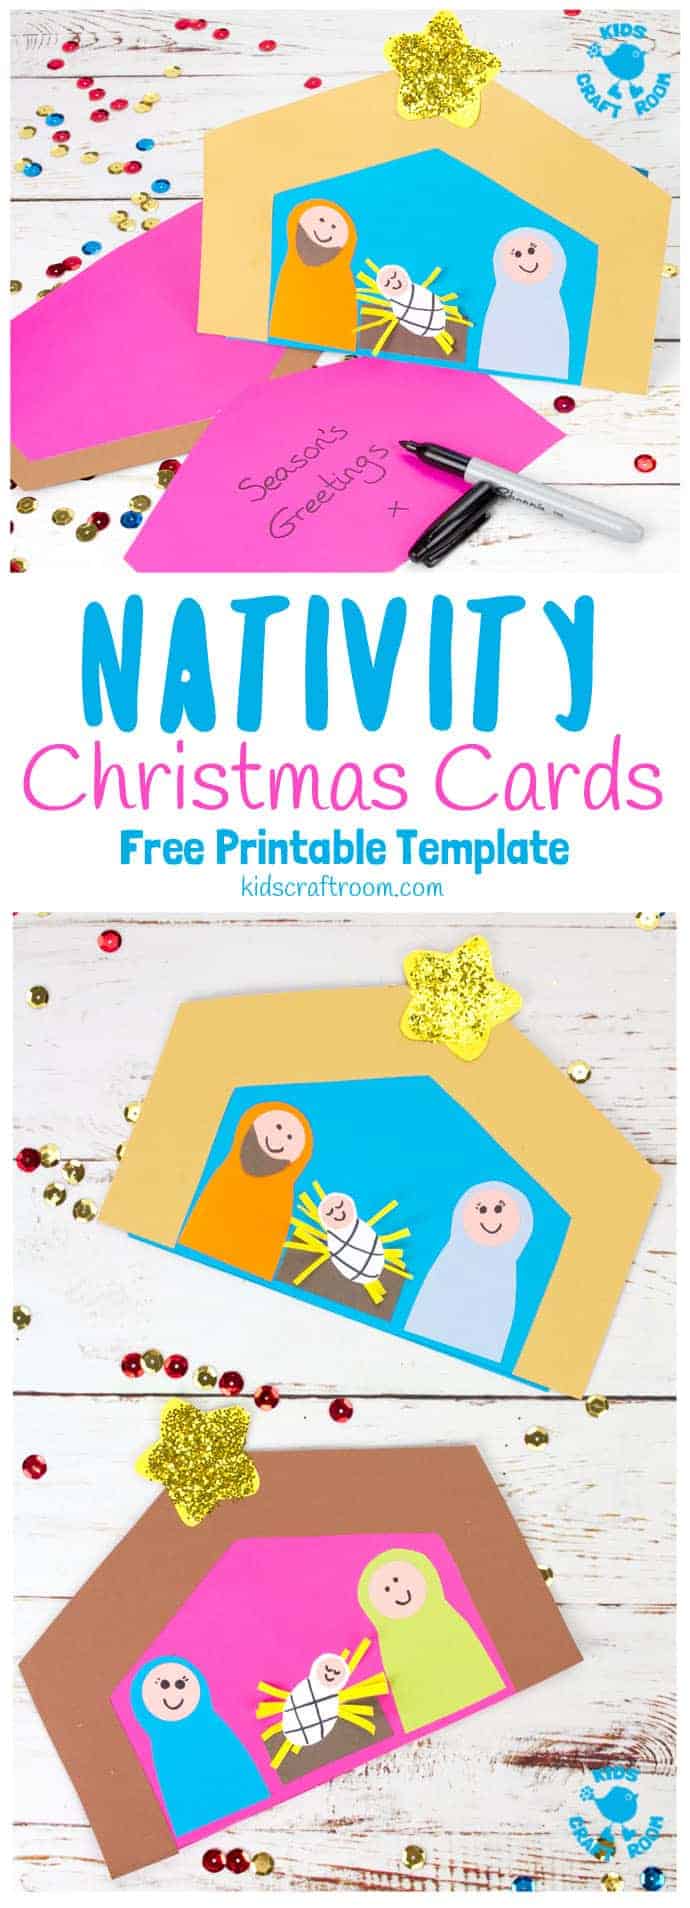 Christmas Card Nativity Craft Kids Craft Room